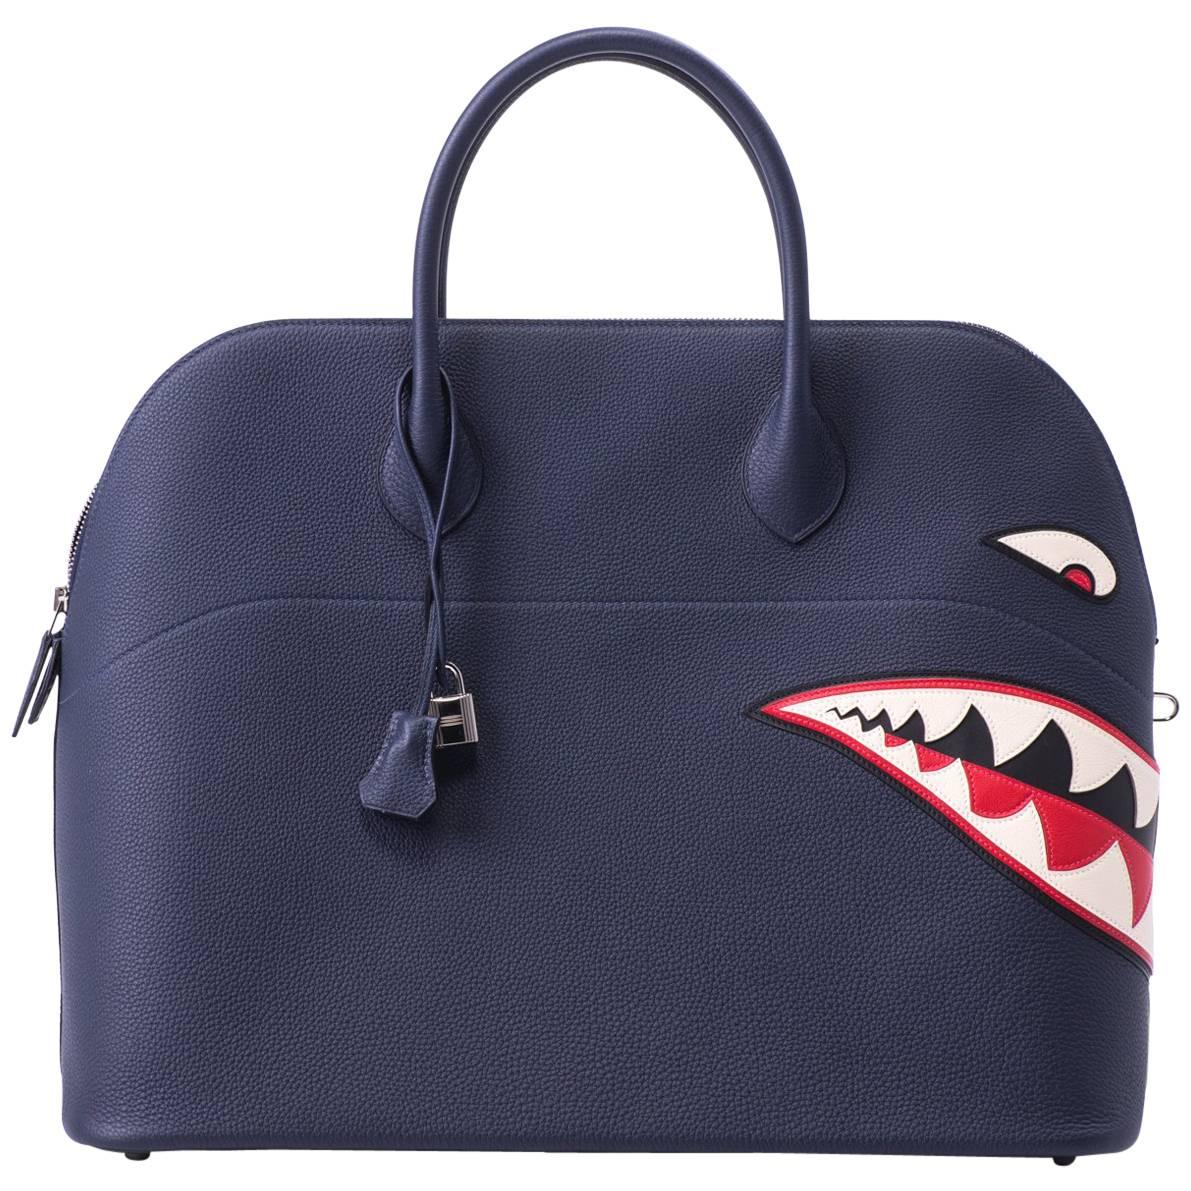 New in Box Hermes Limited Edition Indigo Blue Shark Bolide Bag